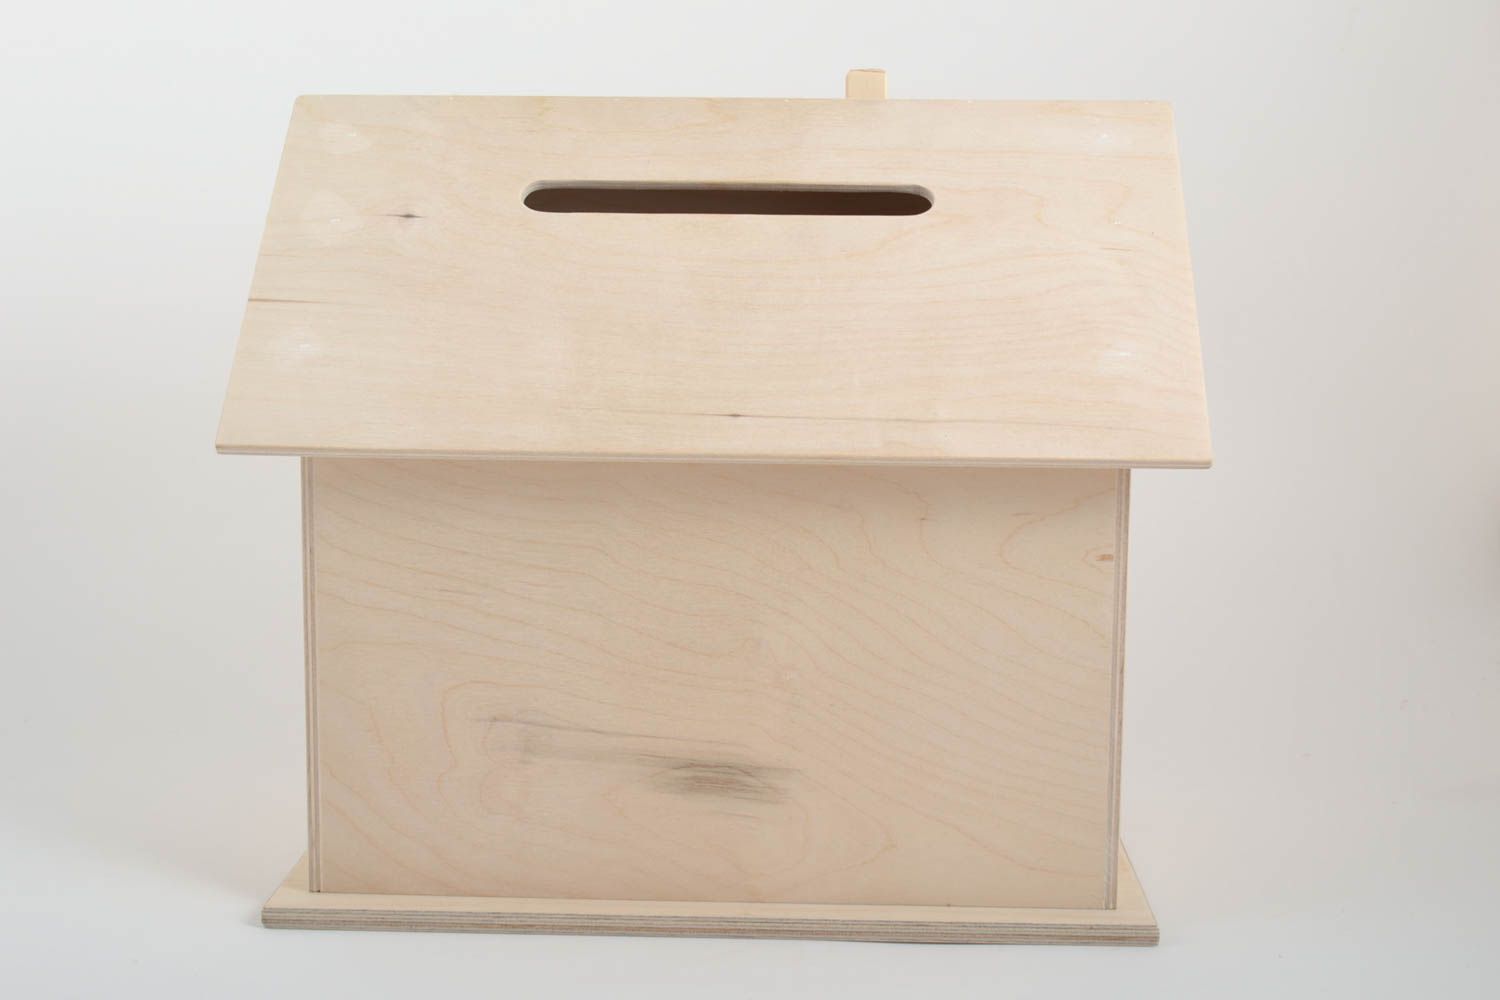 Unusual handmade wooden box plywood blank letter box blanks for creativity photo 3